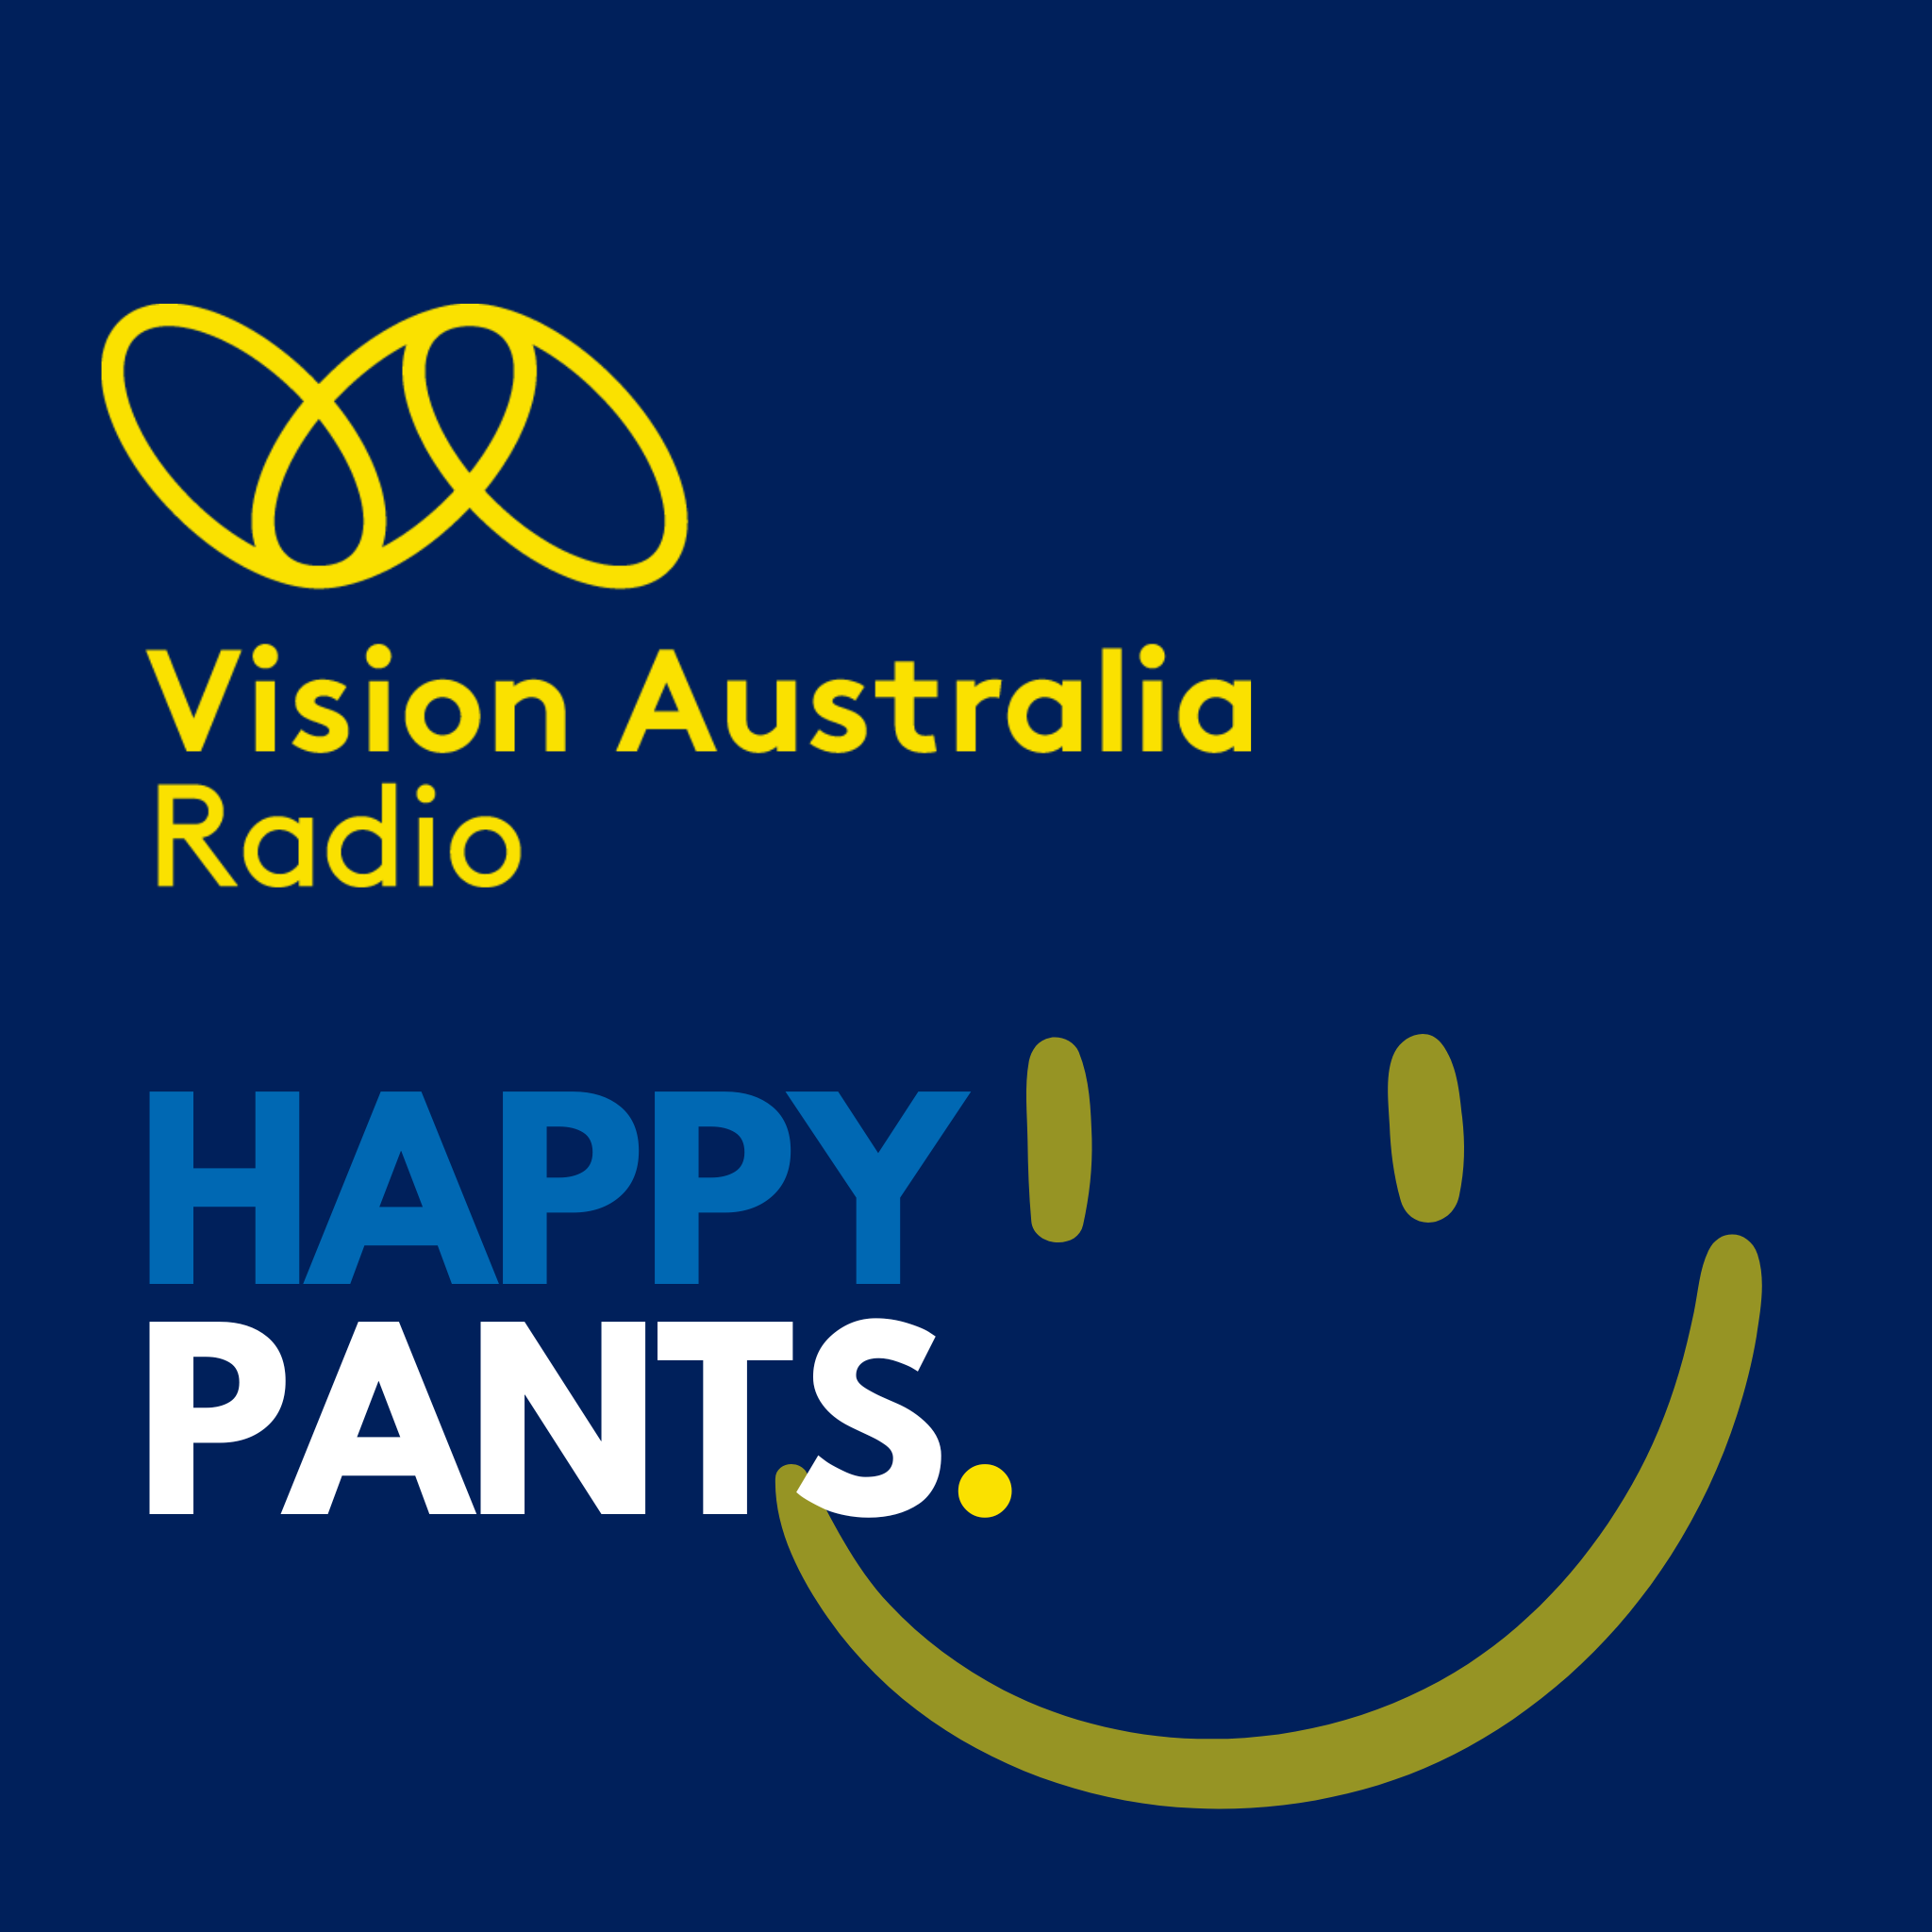 Happy Pants - February 3